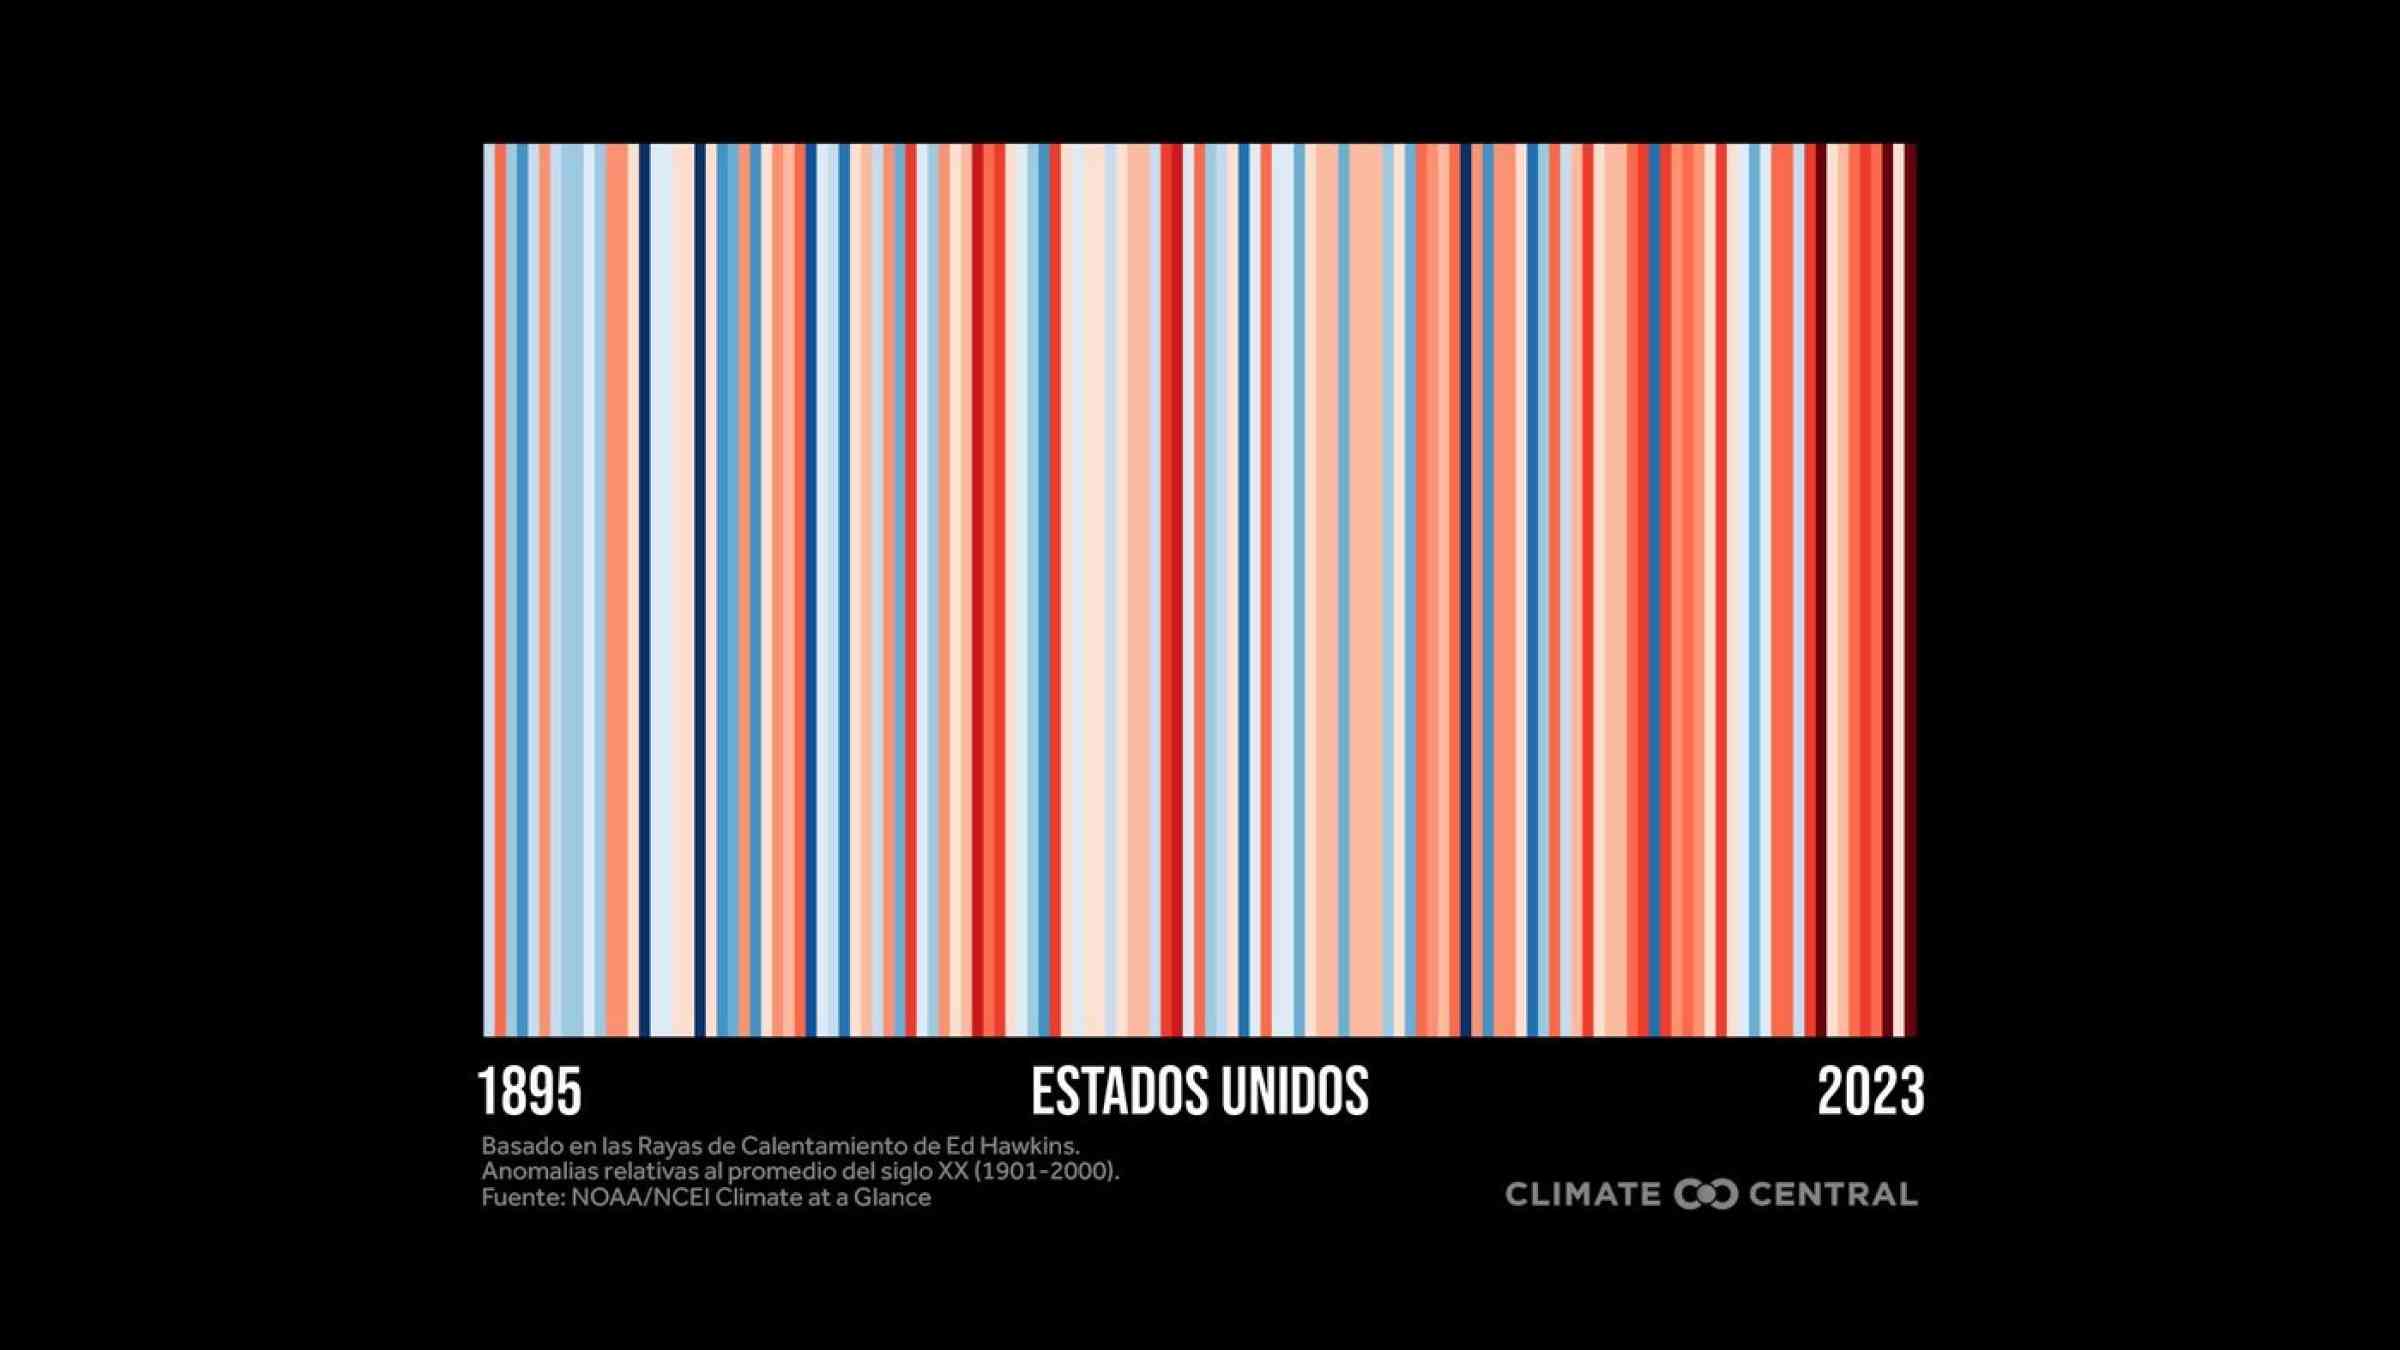 US warming stripes through 2023 illustration